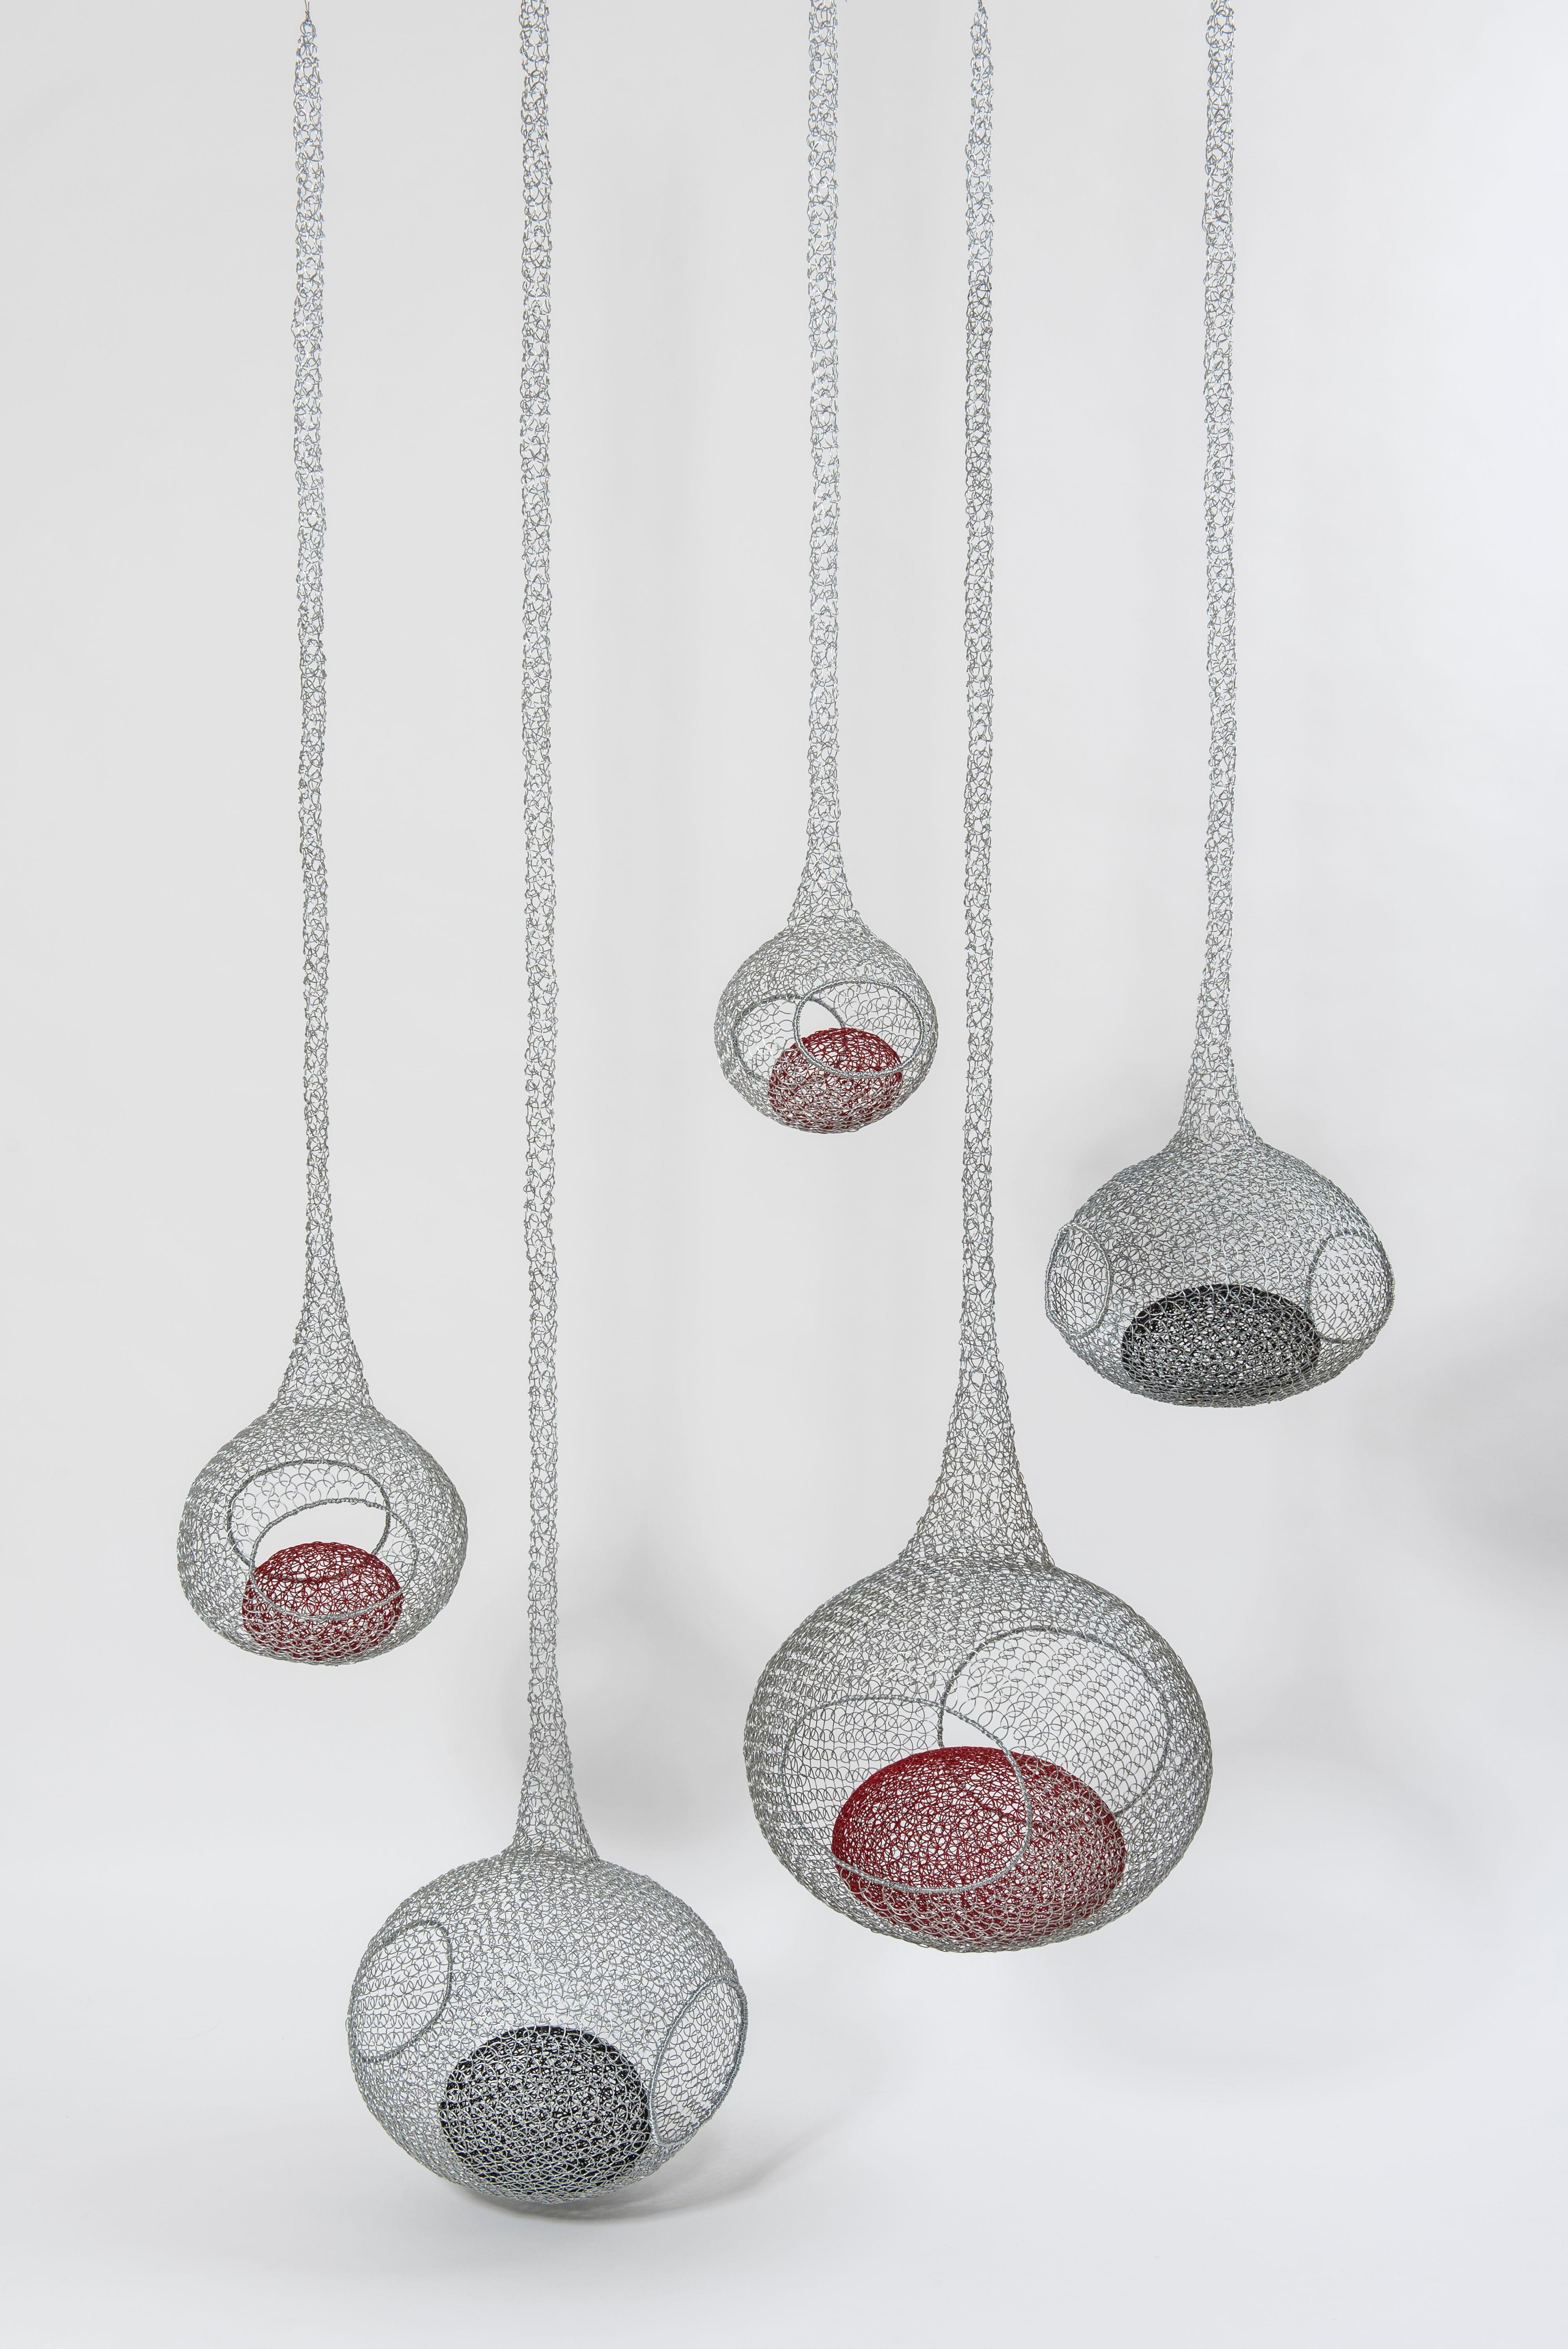 Delphine Grandvaux Abstract Sculpture - "Ove", Hand-woven Metallic Mesh Transparent Airy Pendant Sculpture